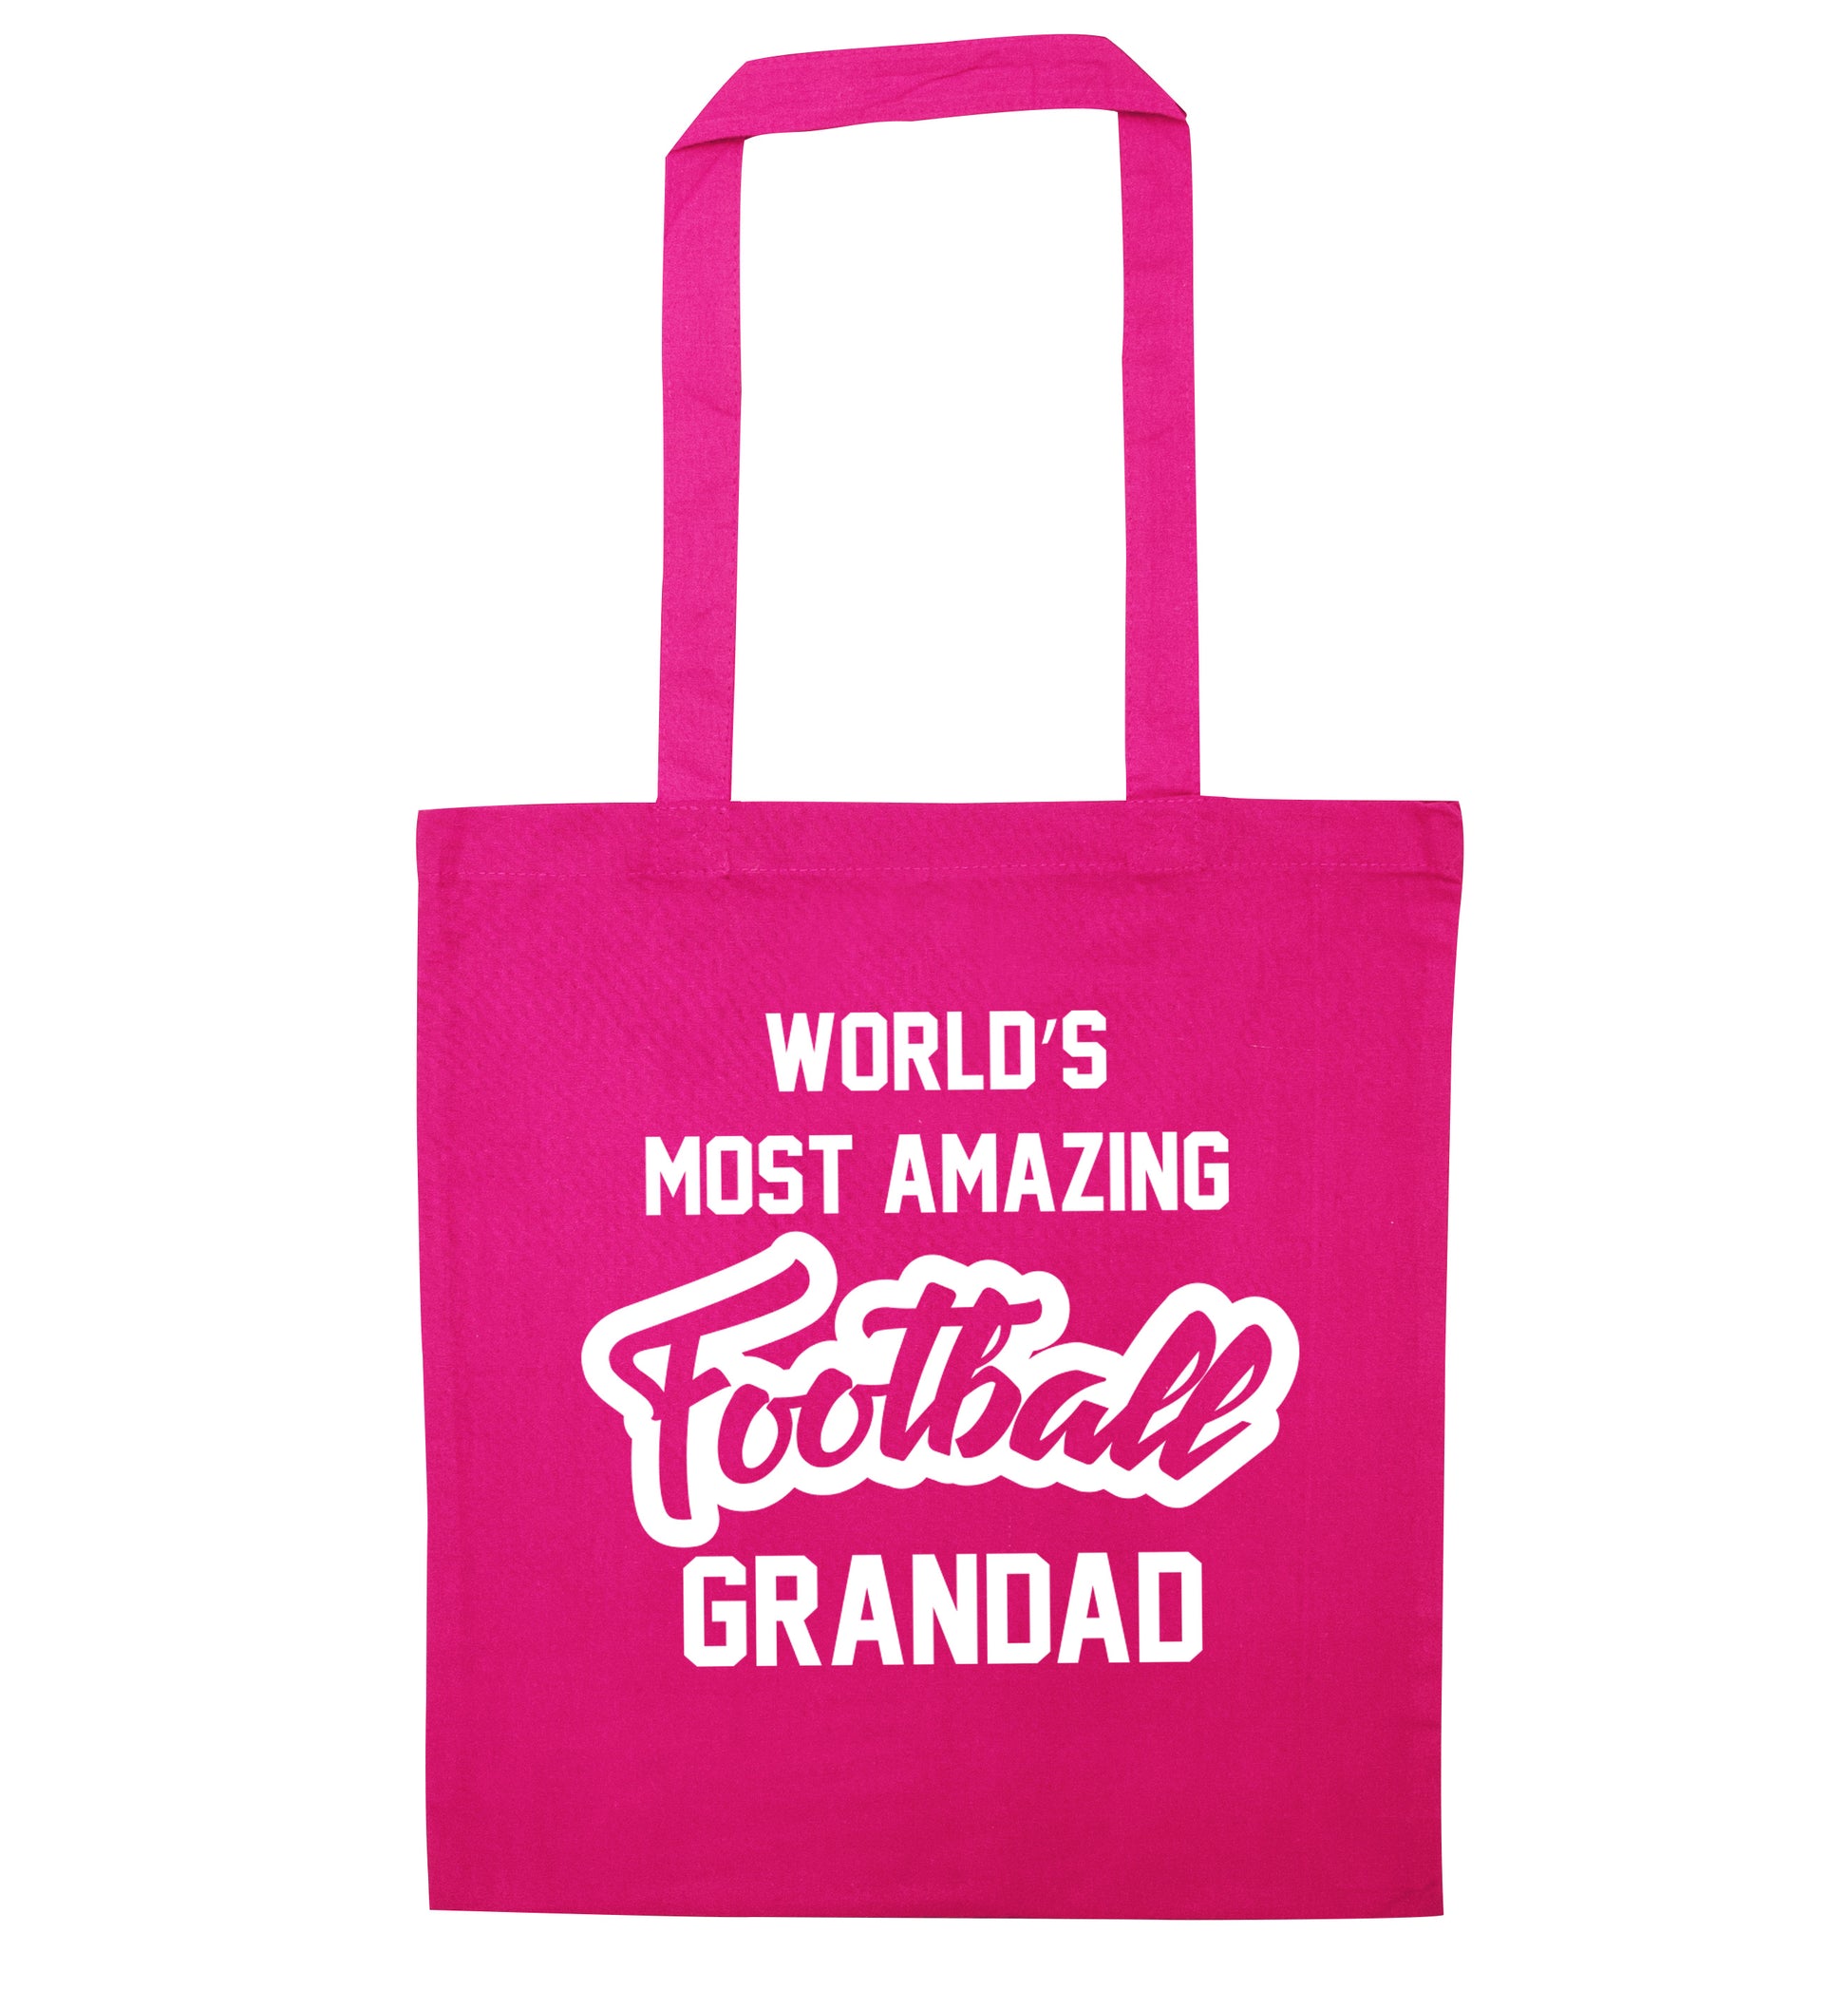 Worlds most amazing football grandad pink tote bag